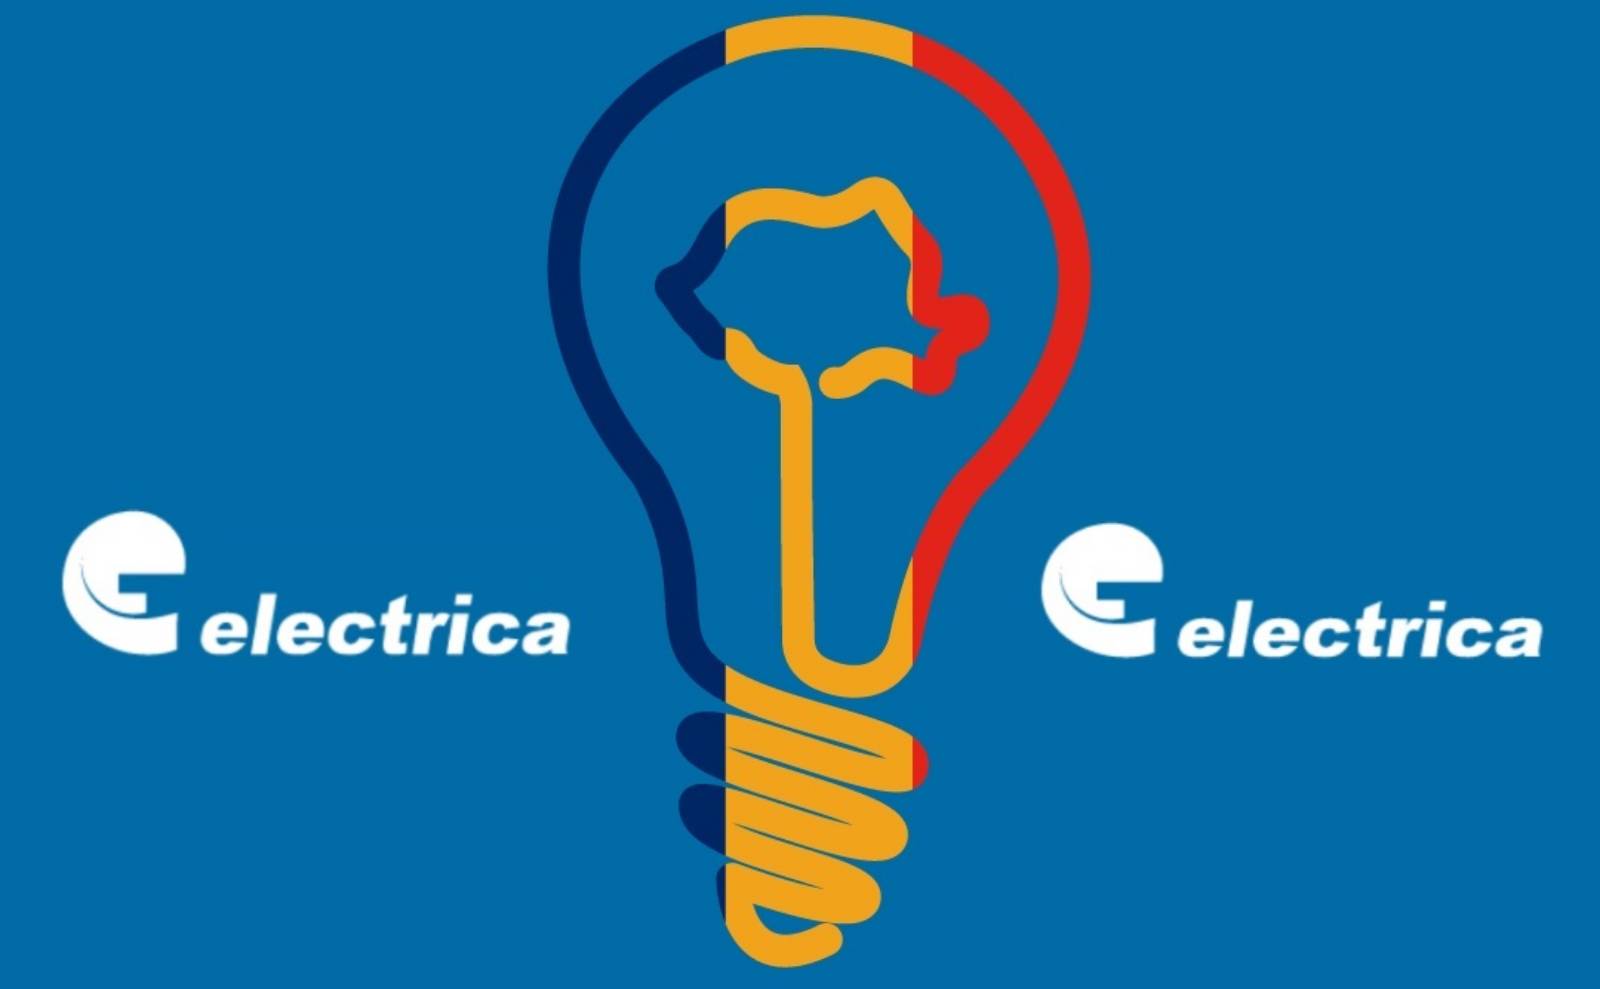 Electrica Comunicare Oficiala ULTIM MOMENT Masuri Clientii Romania